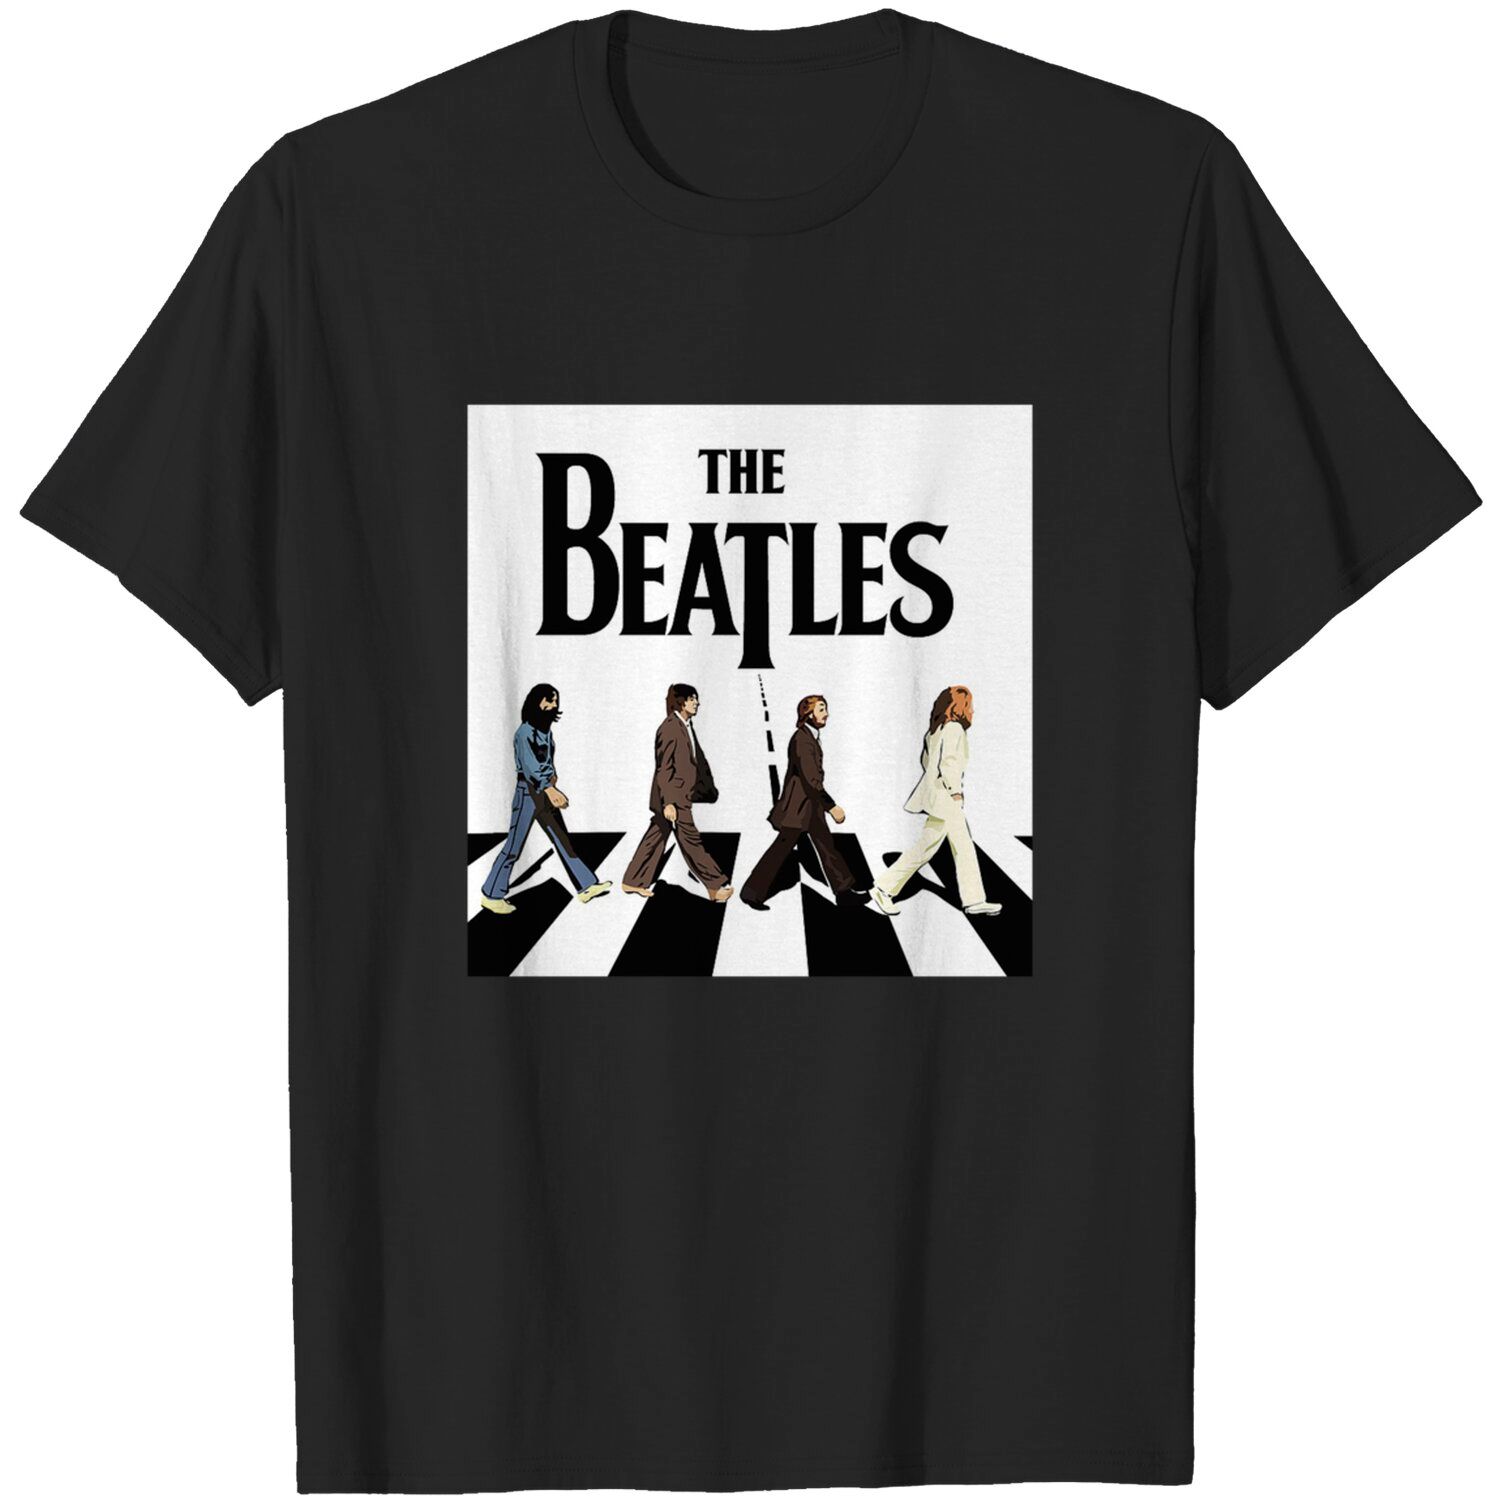 All Sizes Band Name Beatles Women's T-Shirt Black #1